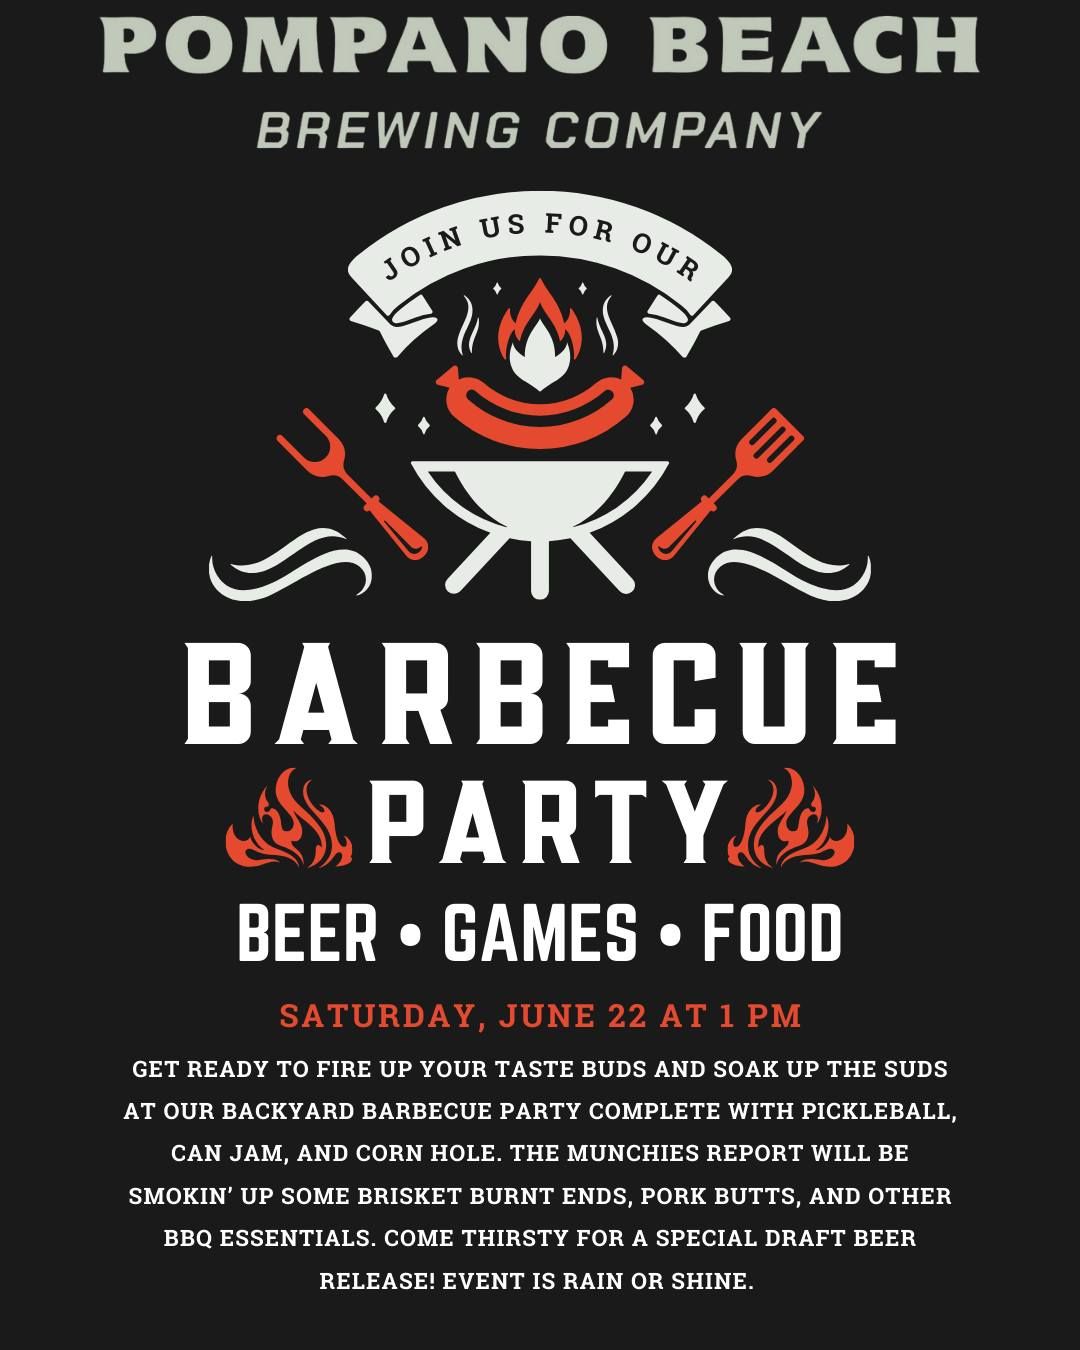 Barbecue Party at Pompano Beach Brewing Company